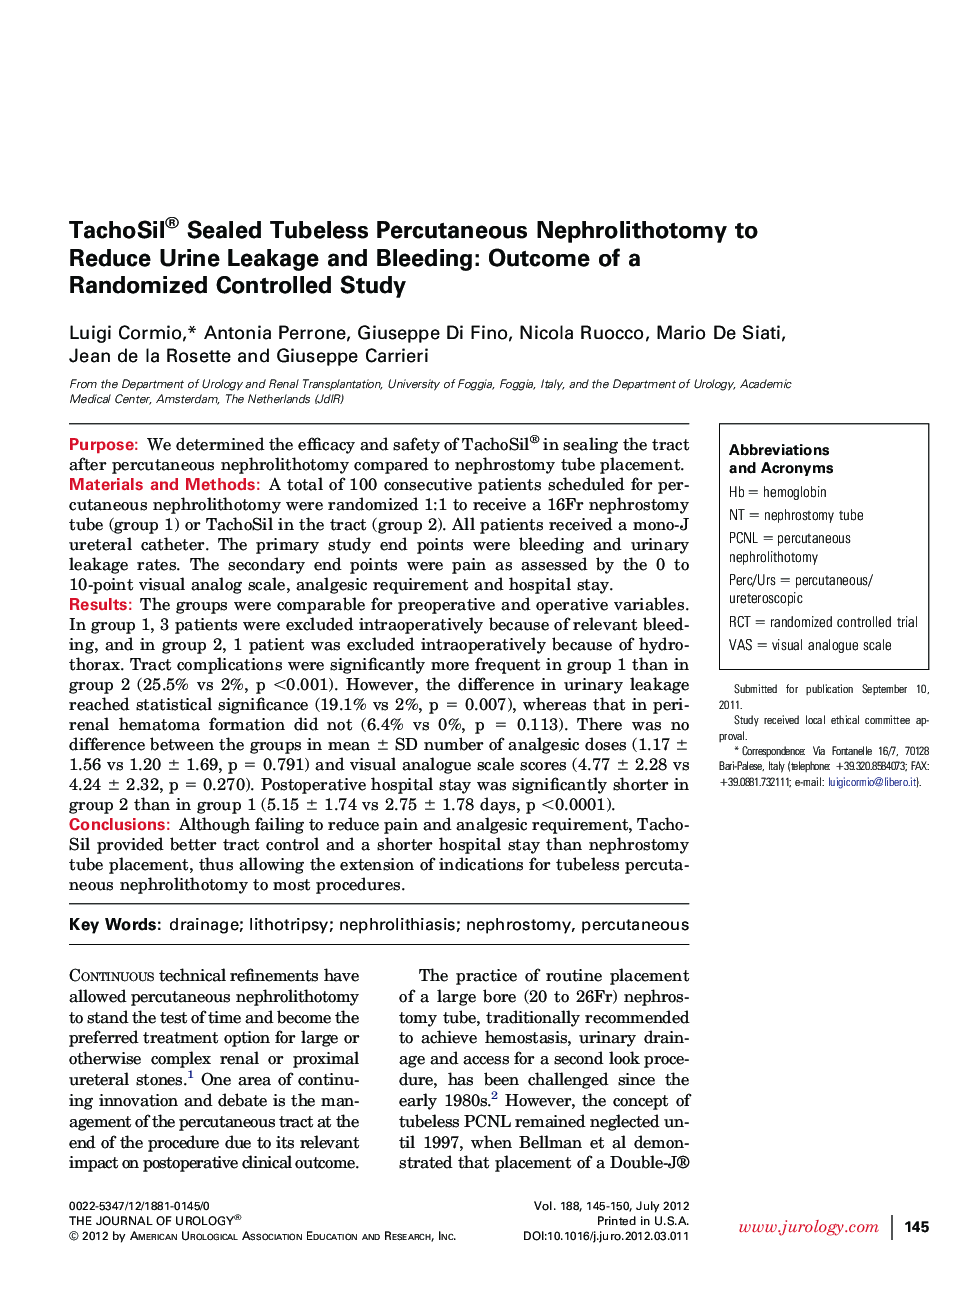 TachoSil® Sealed Tubeless Percutaneous Nephrolithotomy to Reduce Urine Leakage and Bleeding: Outcome of a Randomized Controlled Study 